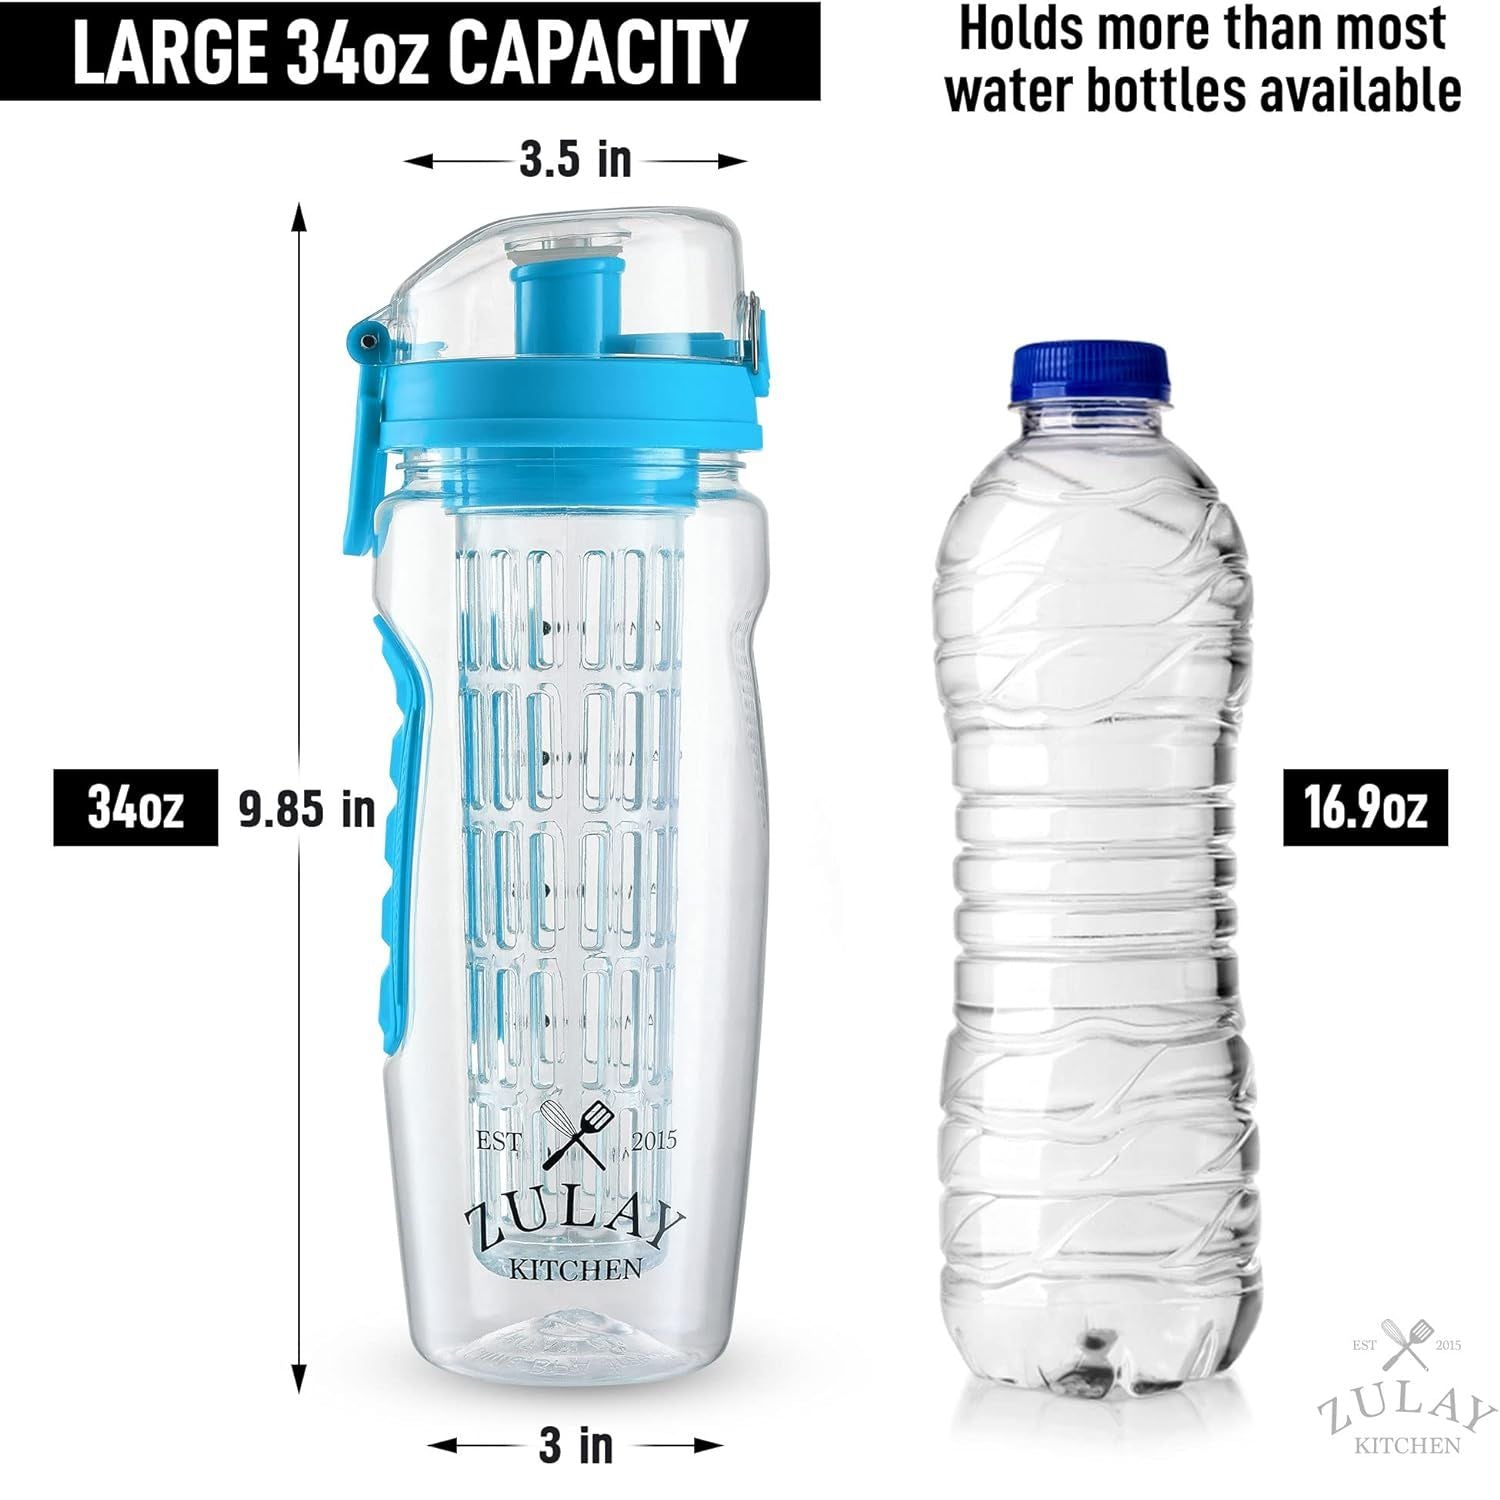 Water Bottle ALL-IN-ONE - Fruit Infuser - Blender Bottle - Water